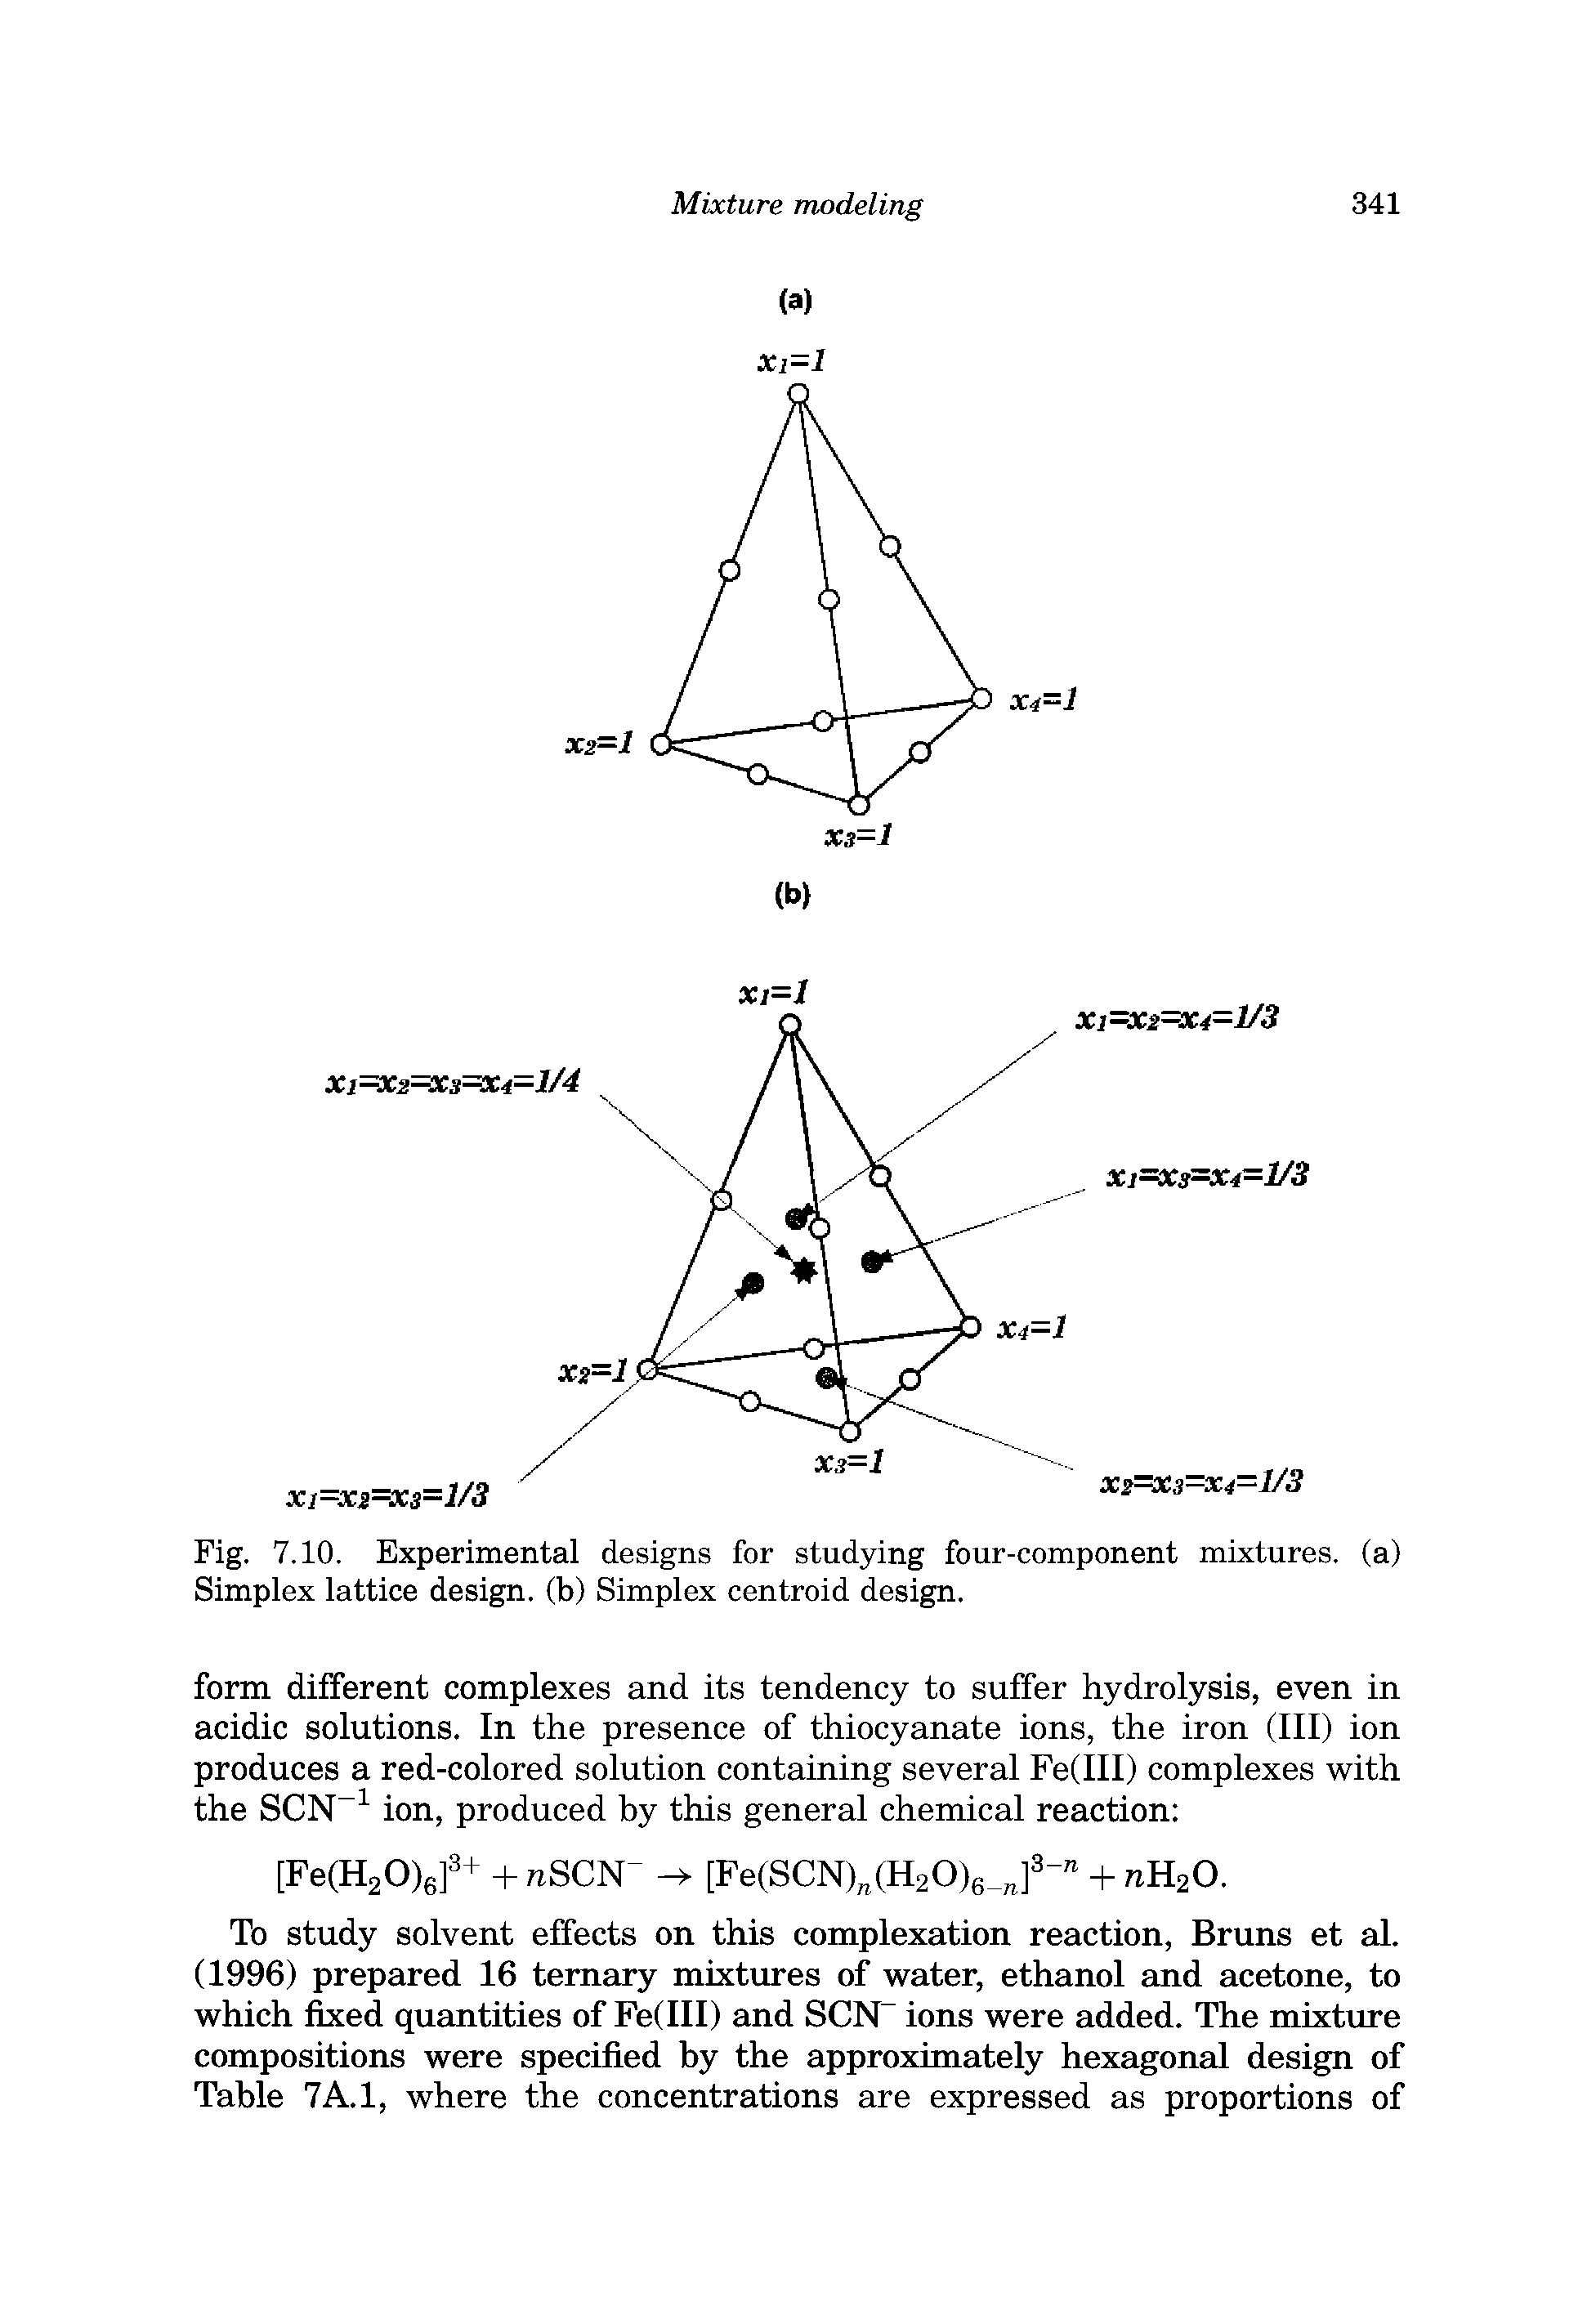 Fig. 7.10. Experimental designs for studying four-component mixtures, (a) Simplex lattice design, (b) Simplex centroid design.